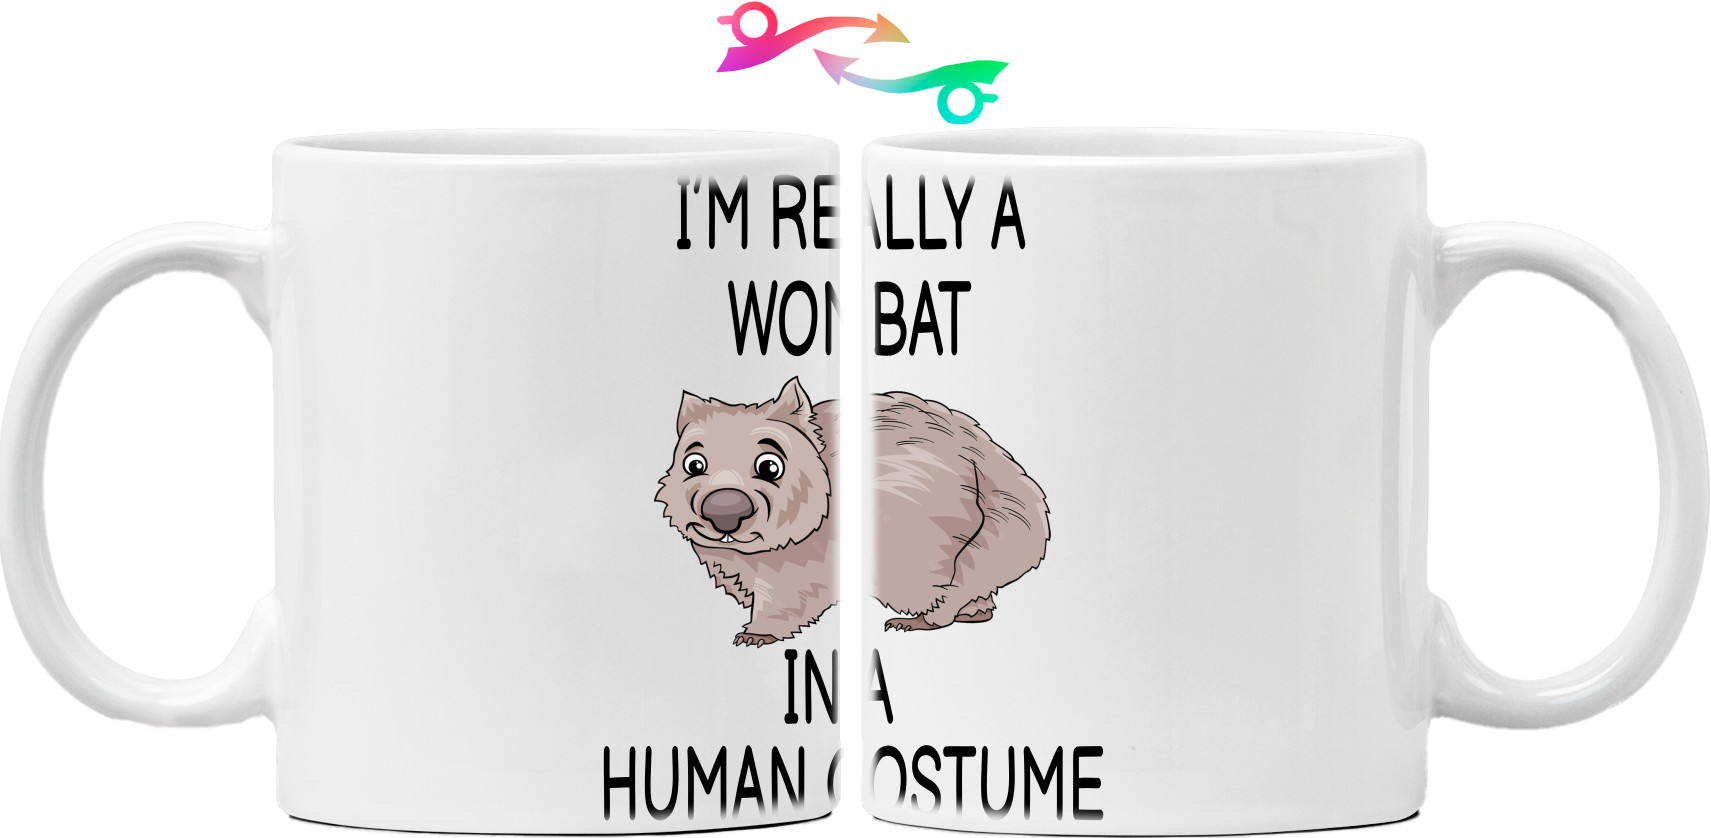 I'm Really A Wombat